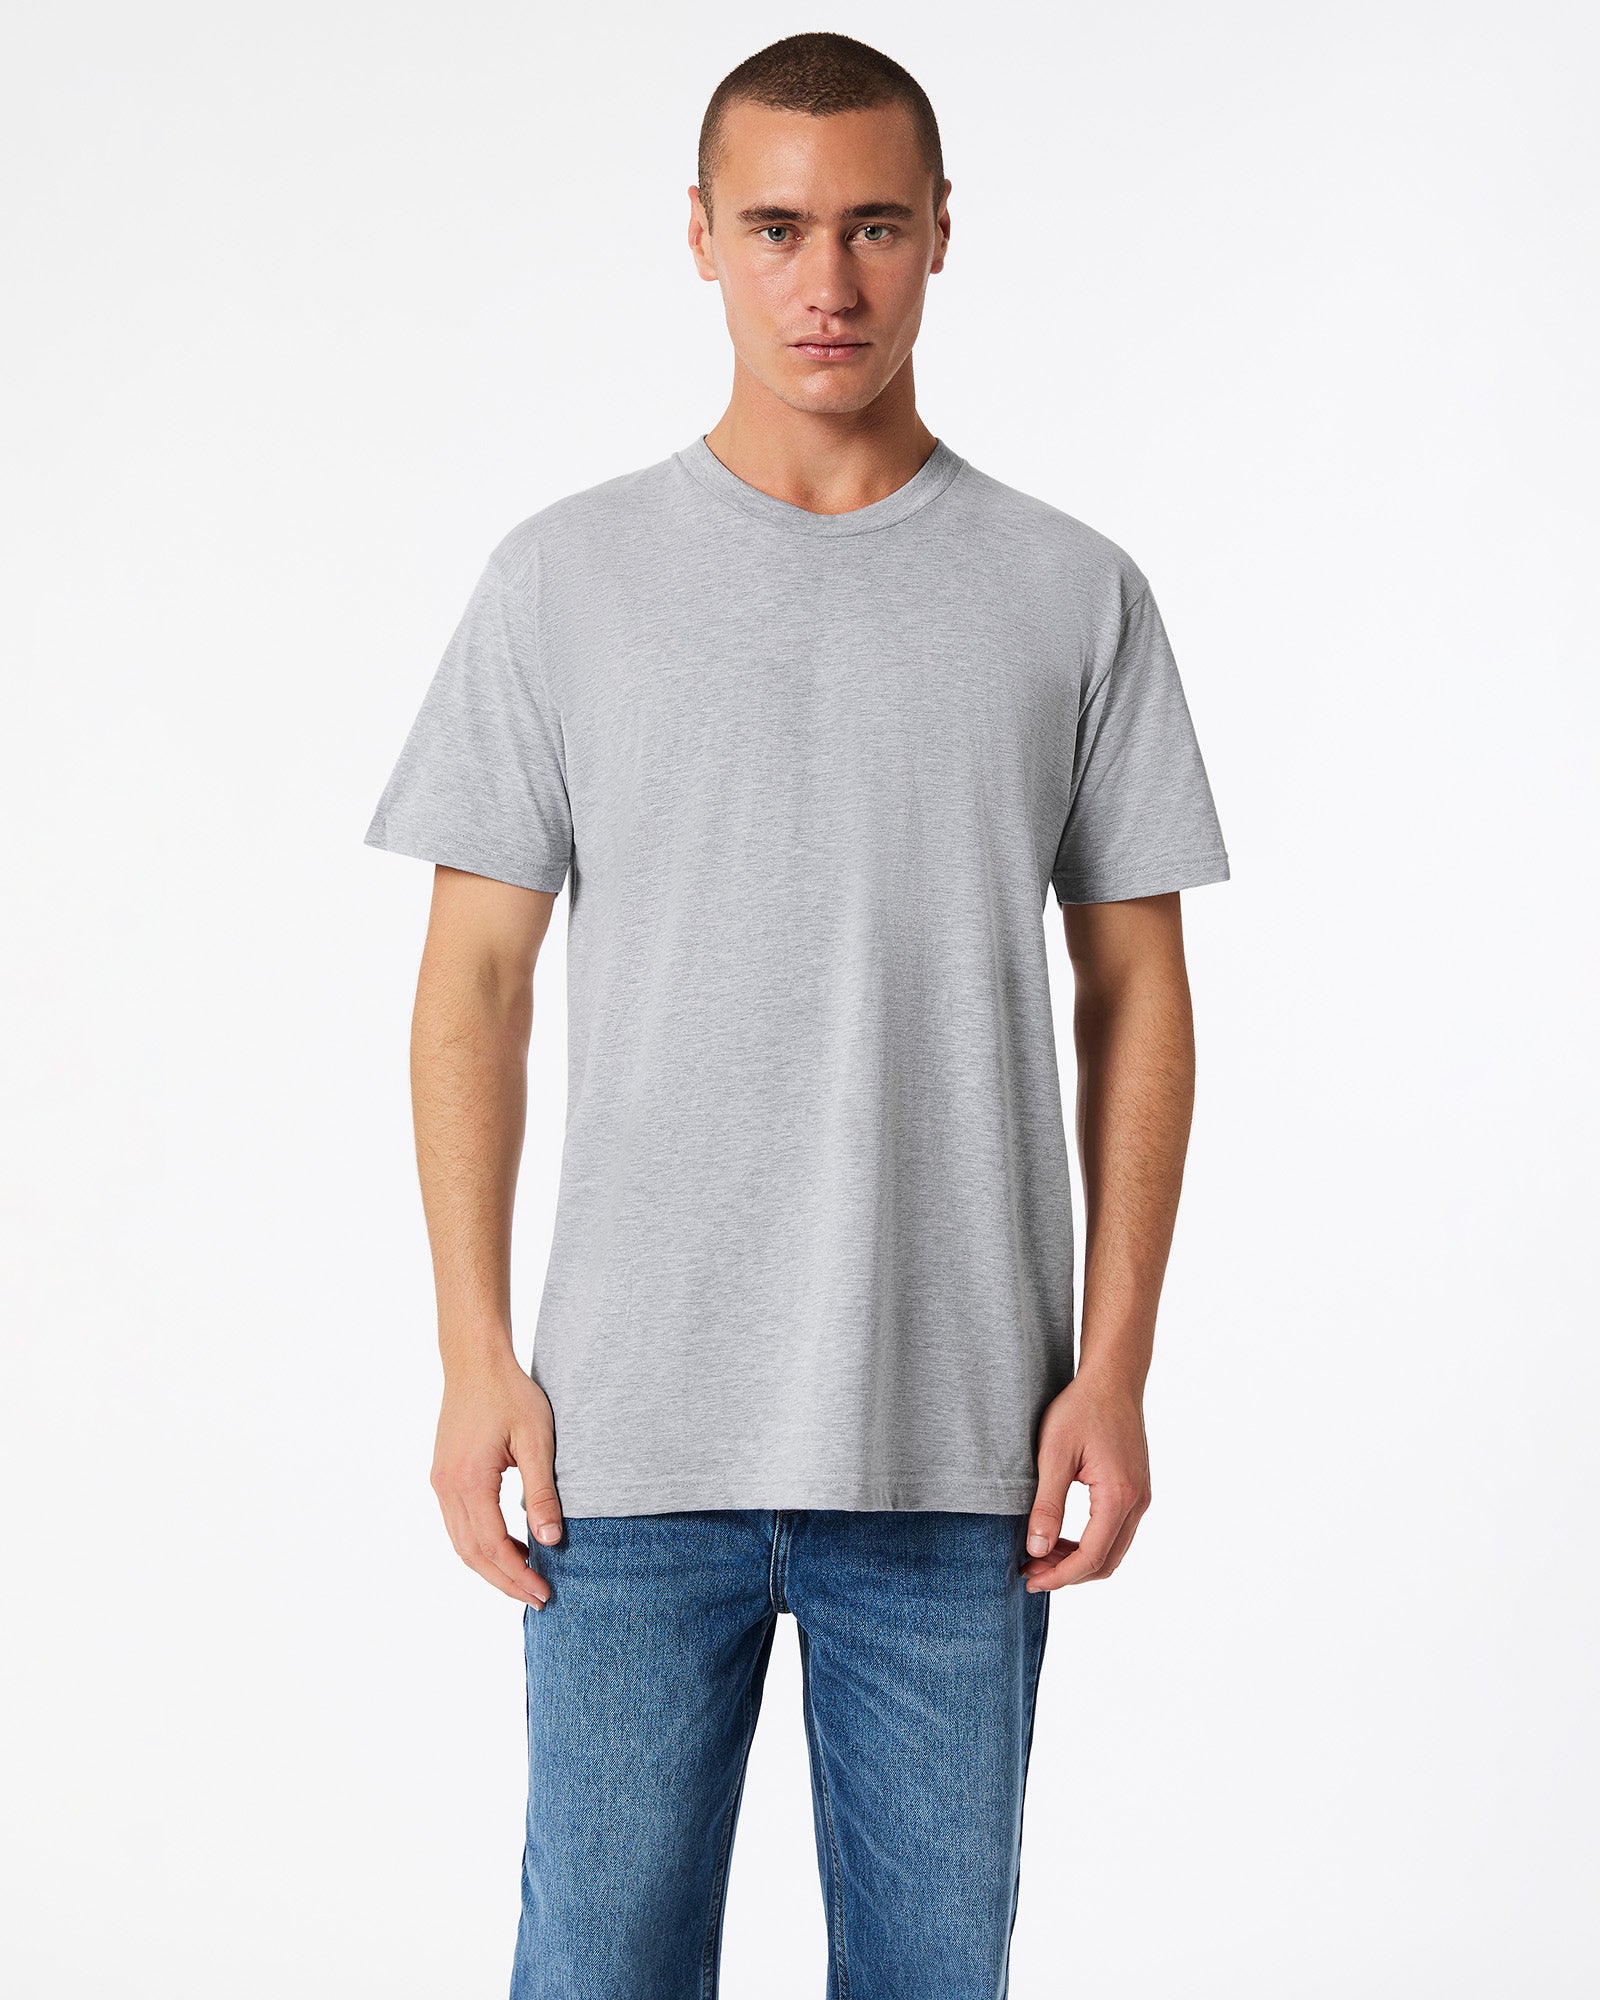 Fine Jersey Unisex Short Sleeve T-Shirt - Heather Grey